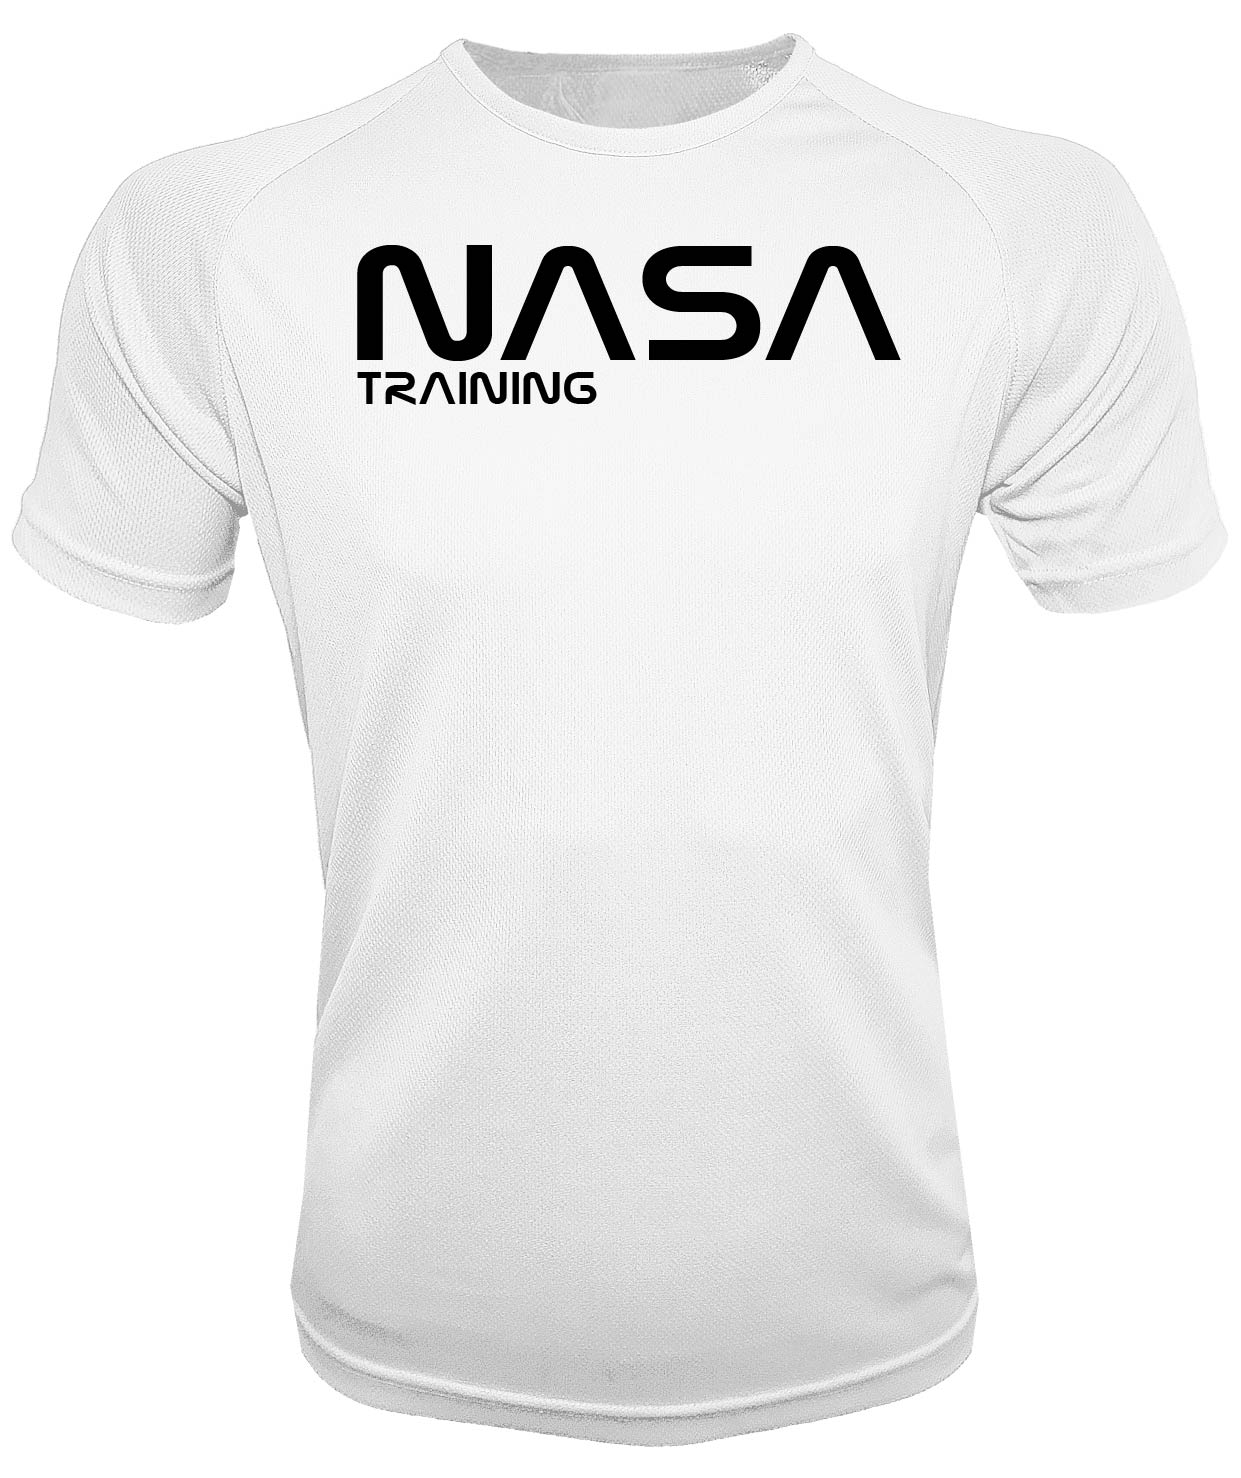 Camiseta deportiva NASA